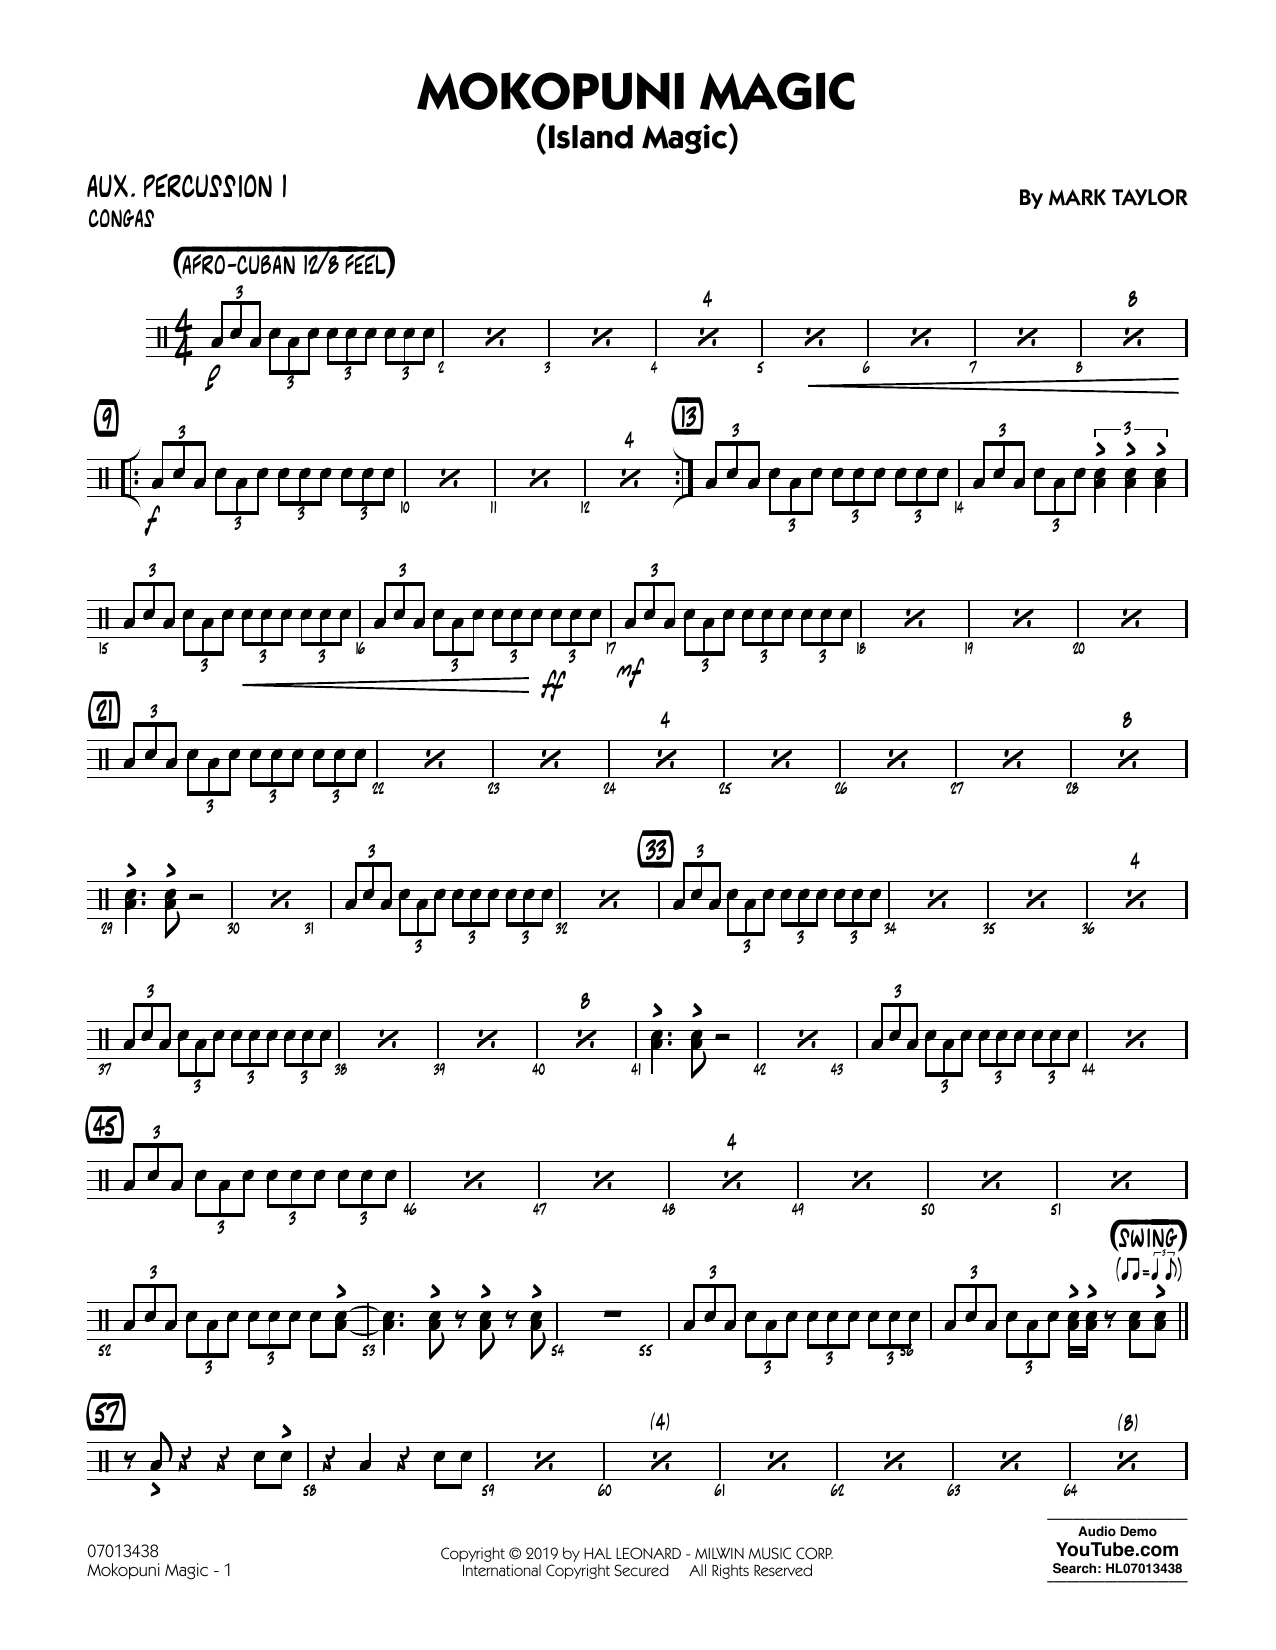 Mark Taylor Mokopuni Magic (Island Magic) - Aux. Percussion 1 Sheet Music Notes & Chords for Jazz Ensemble - Download or Print PDF